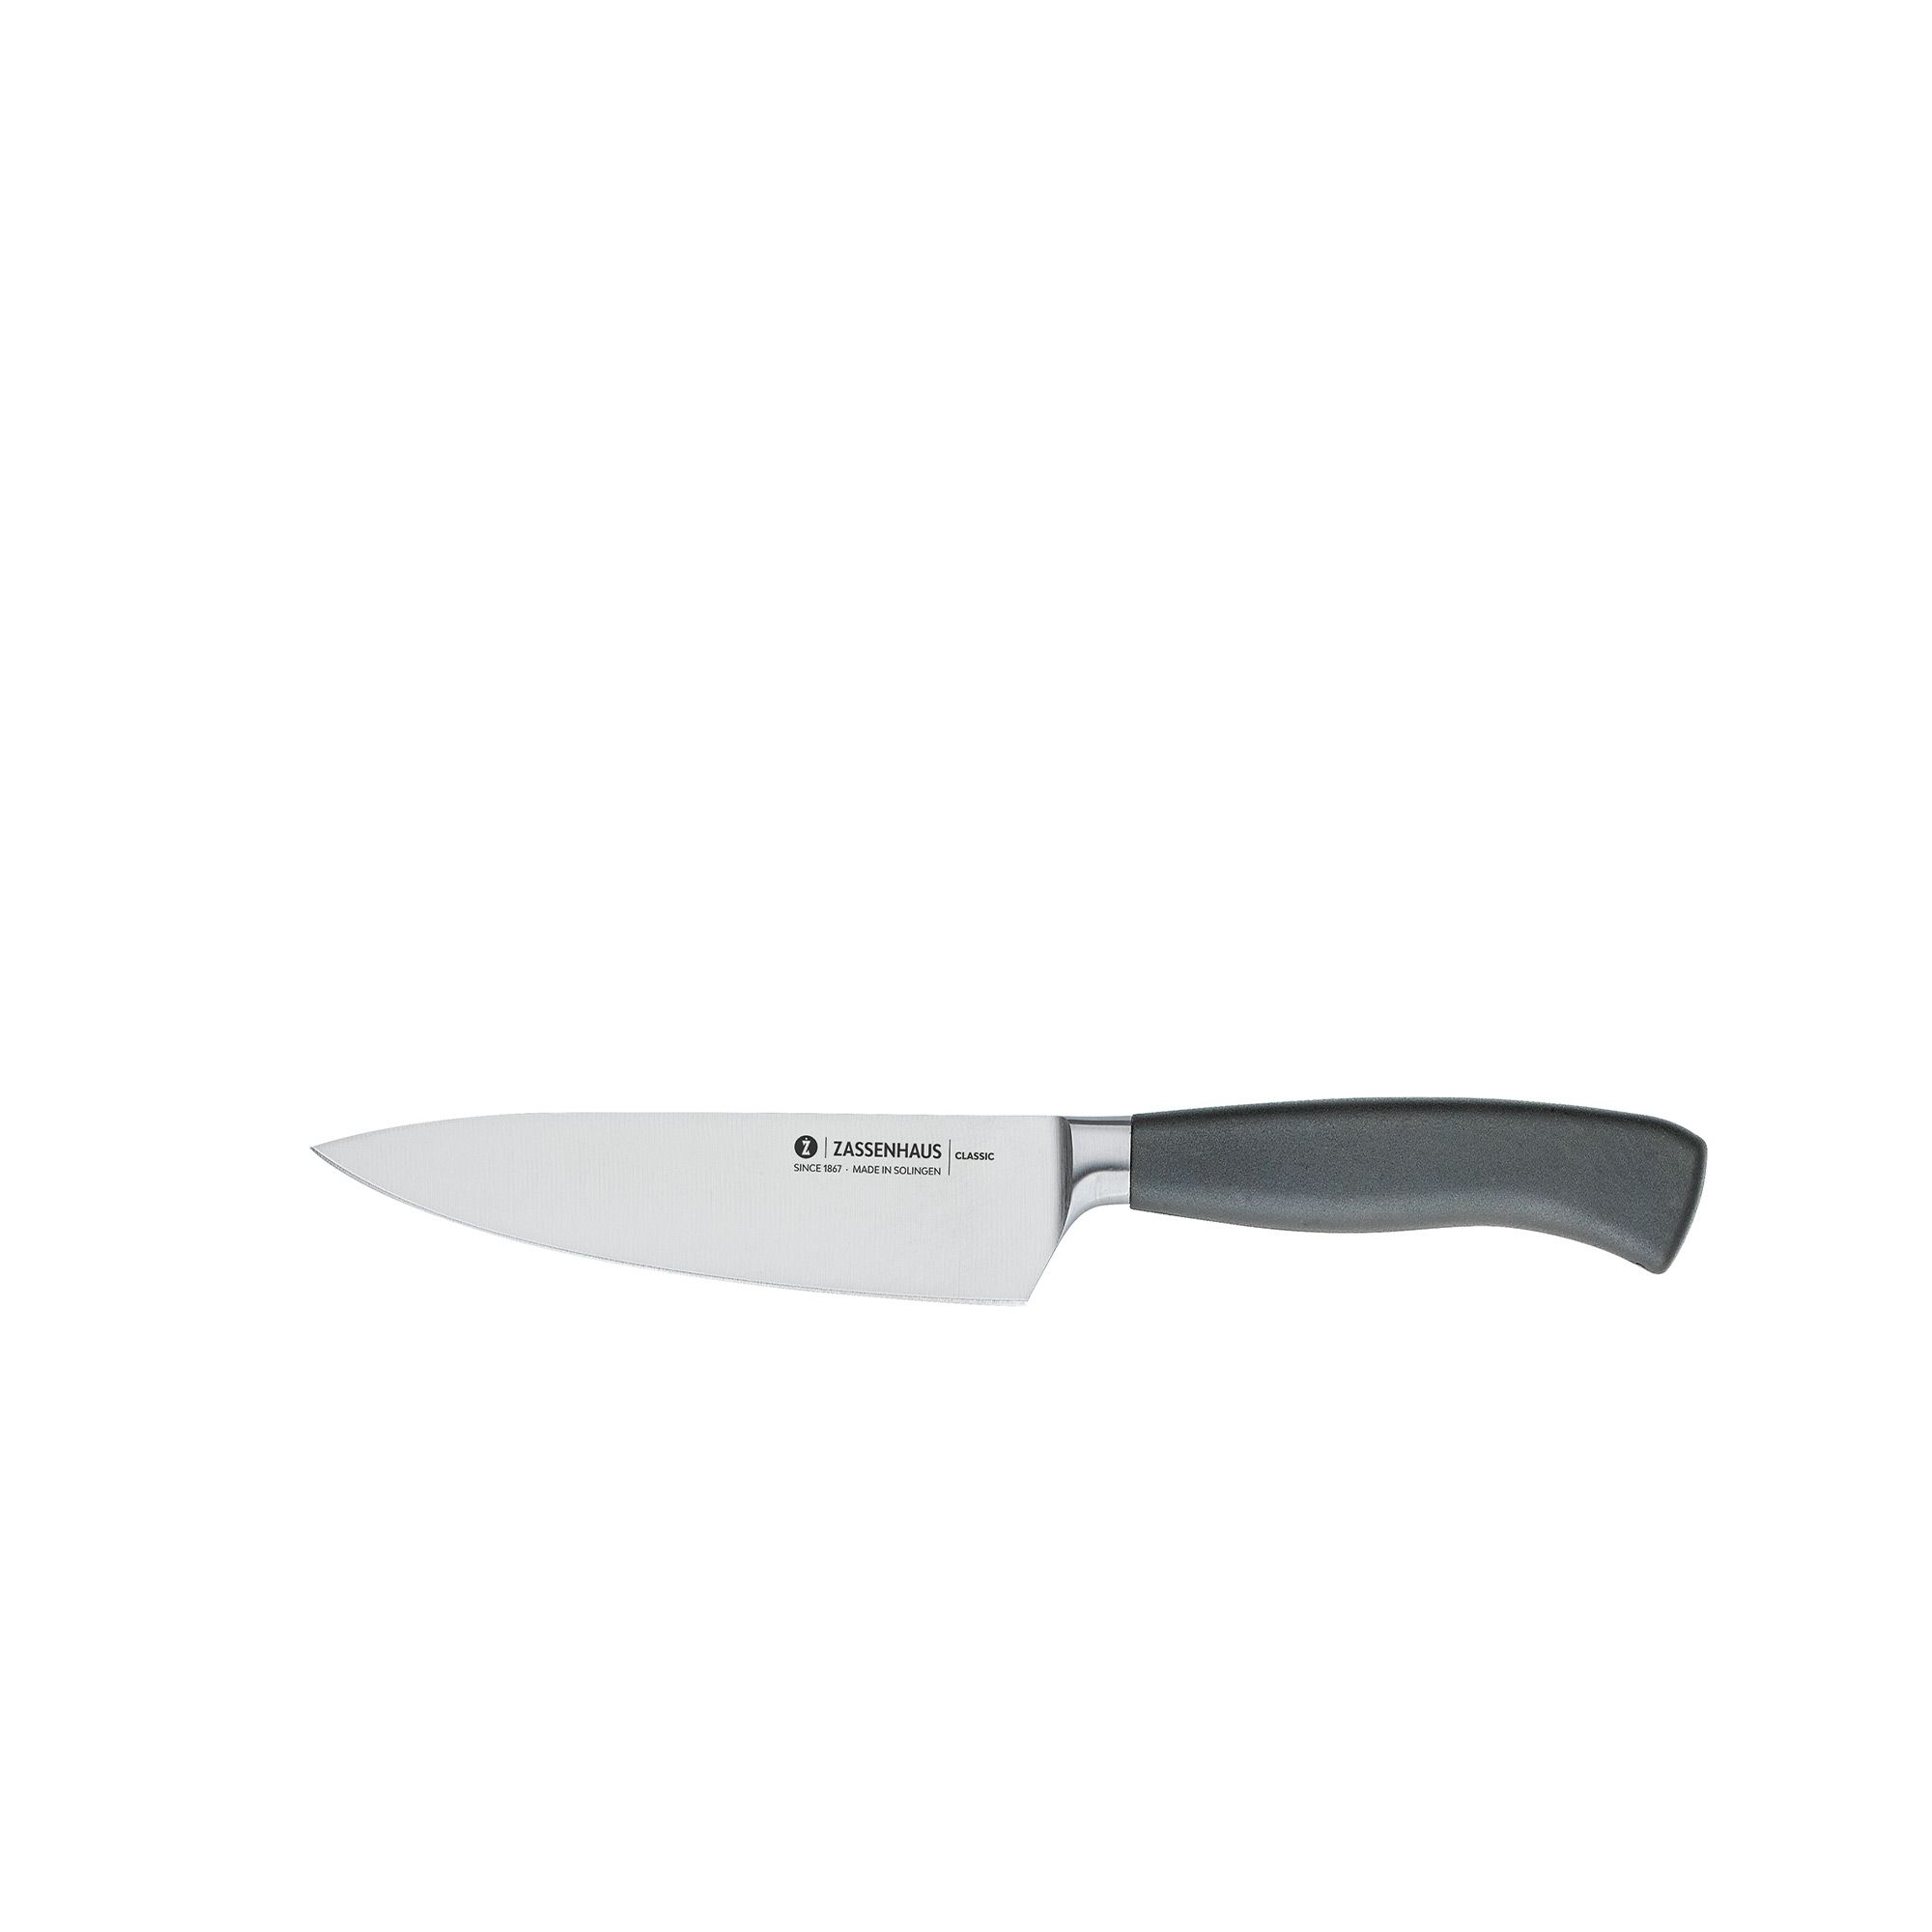 Zassenhaus - cooking knife 16 cm - CLASSIC